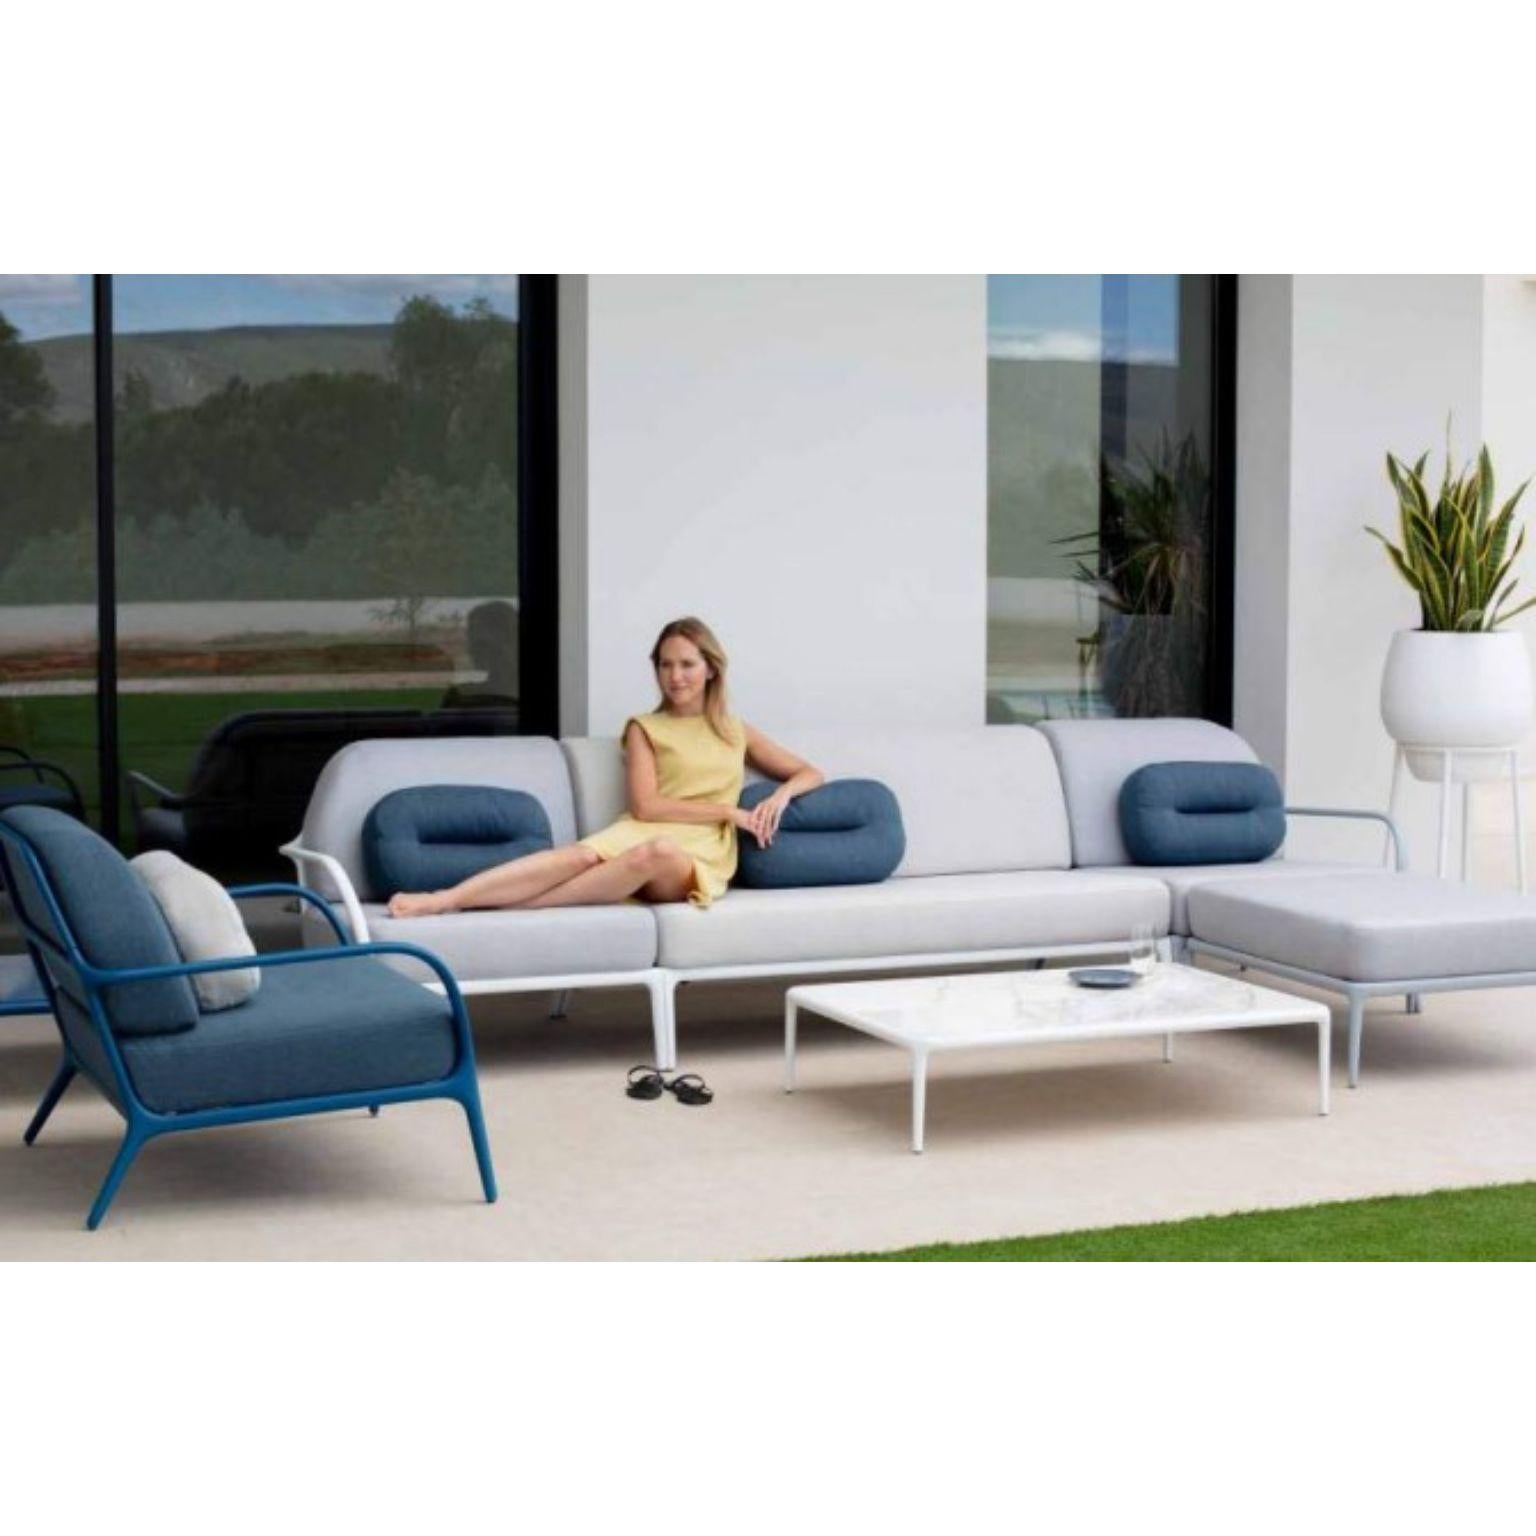 Post-Modern Xaloc Left 90 White Modular Sofa by Mowee For Sale